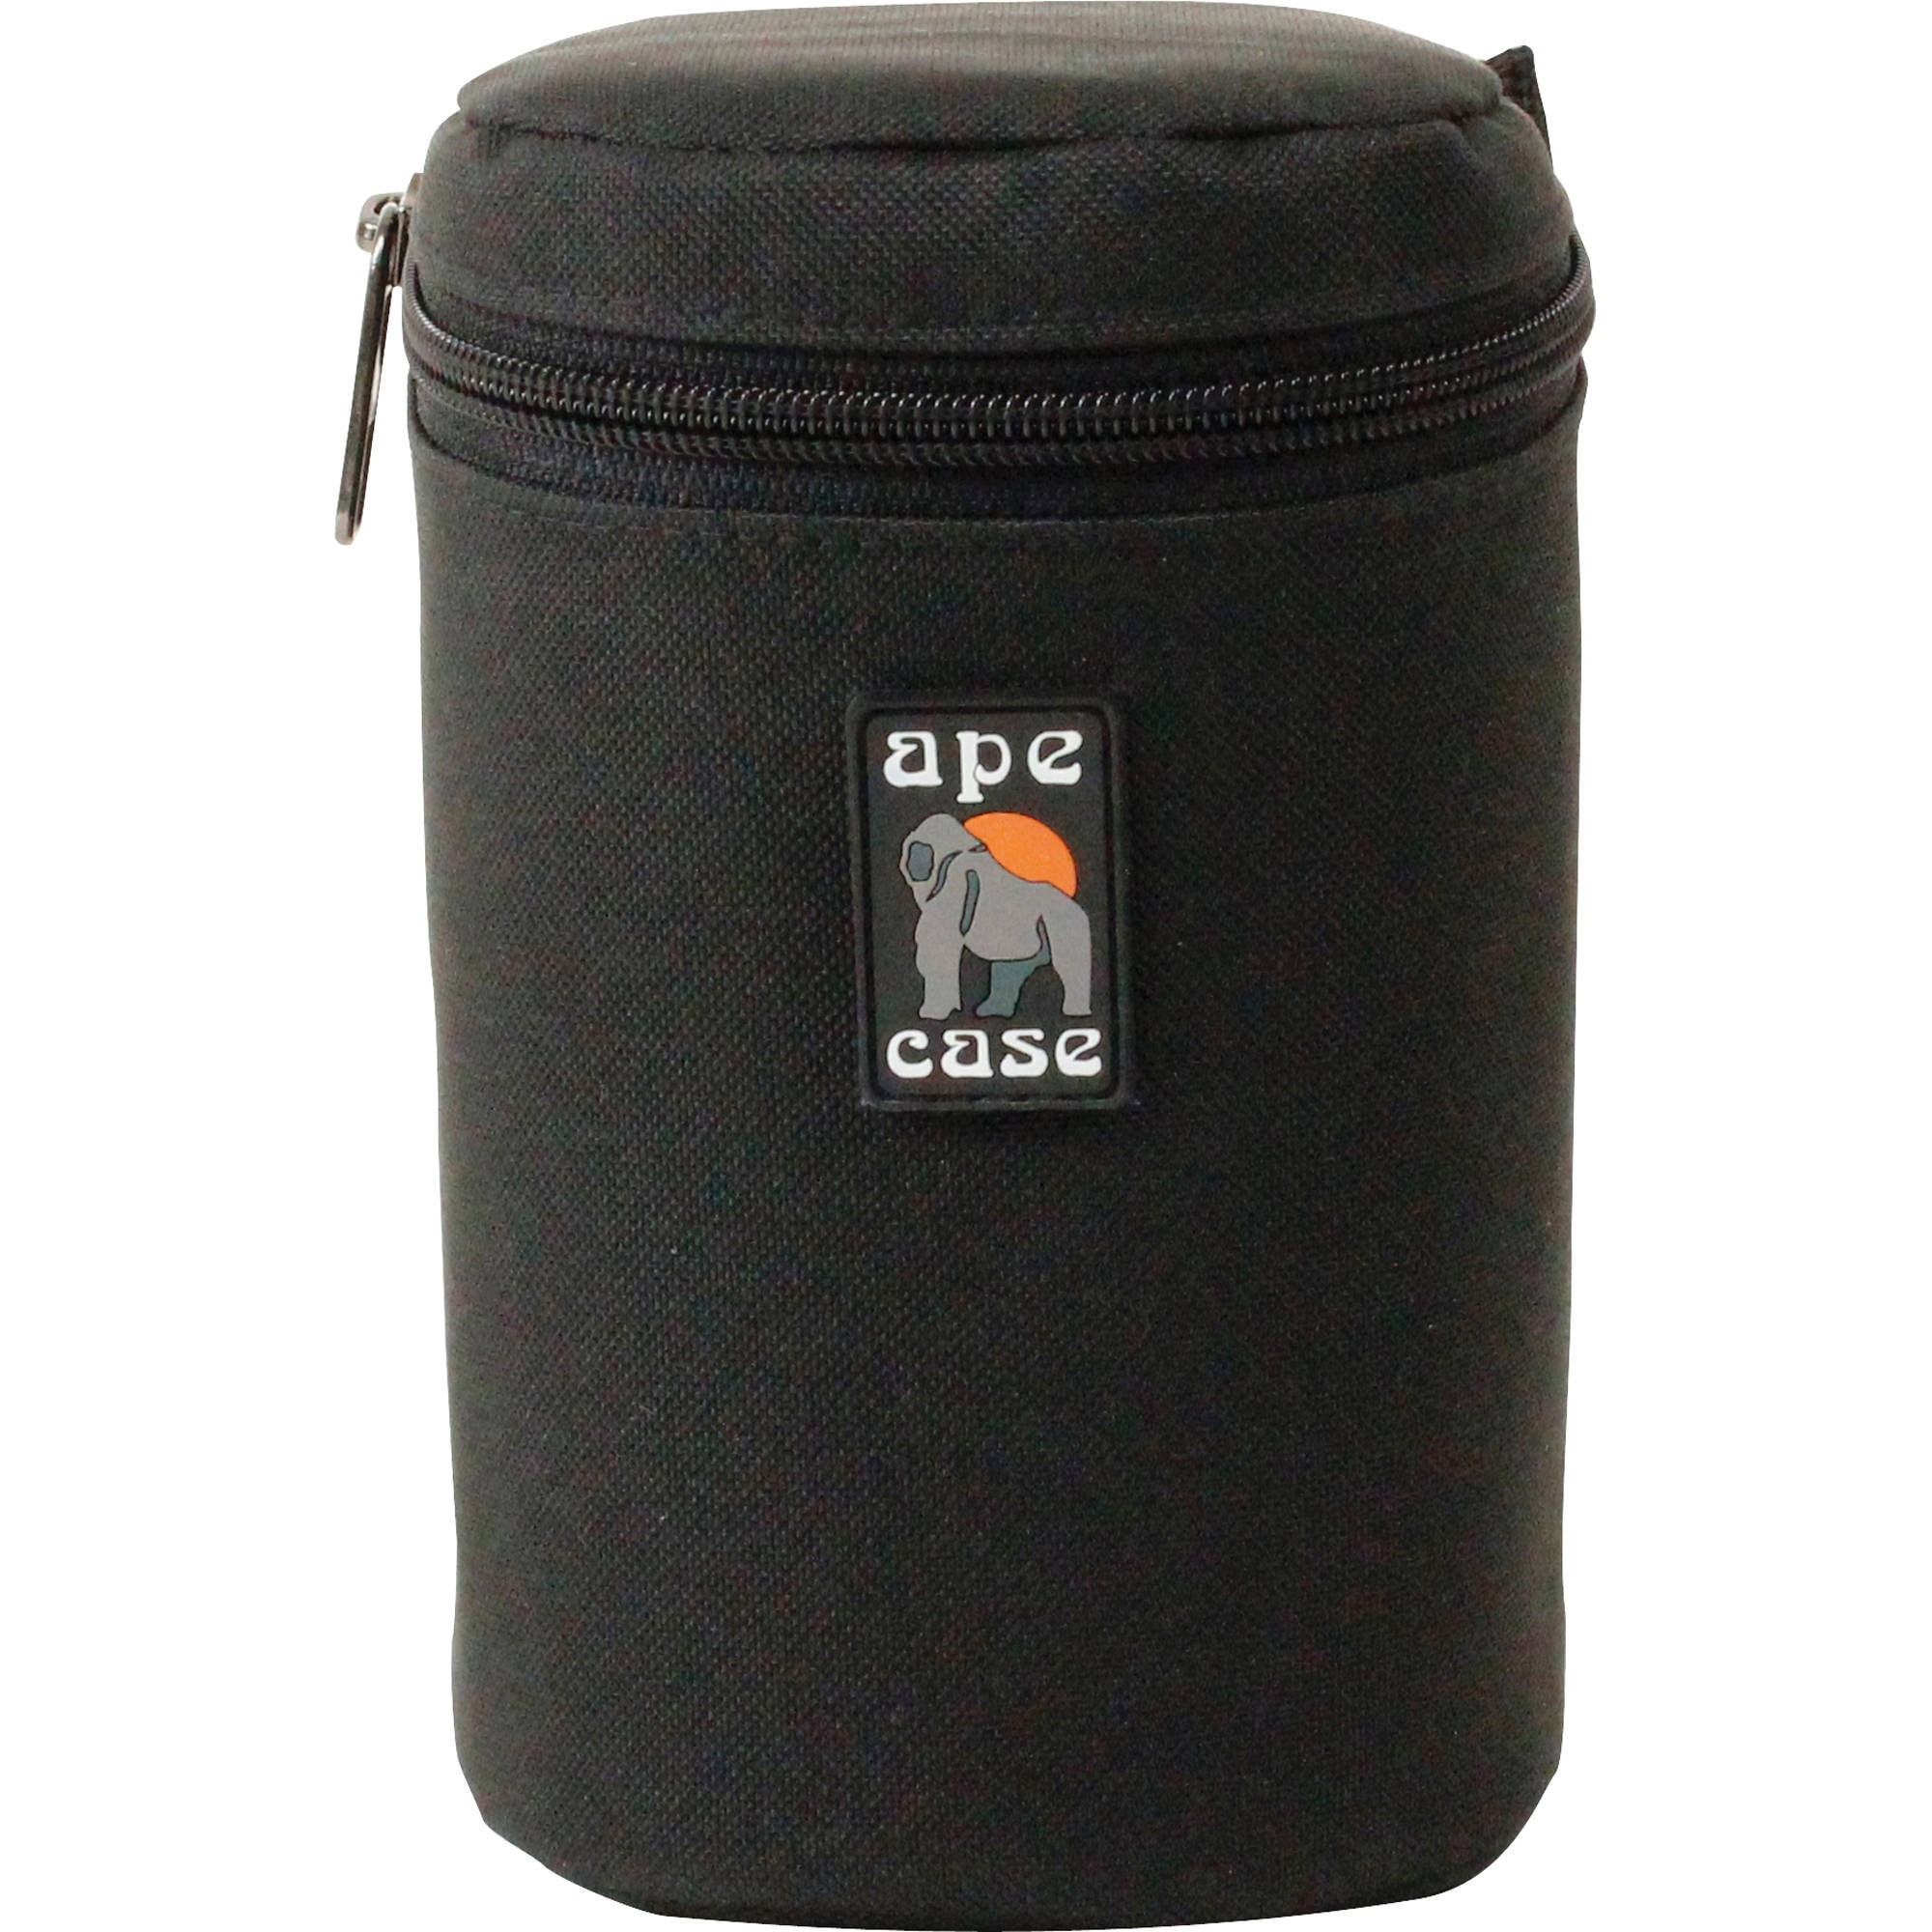 Ape Case ACLC10 Adjustable Medium Lens Case (Black)